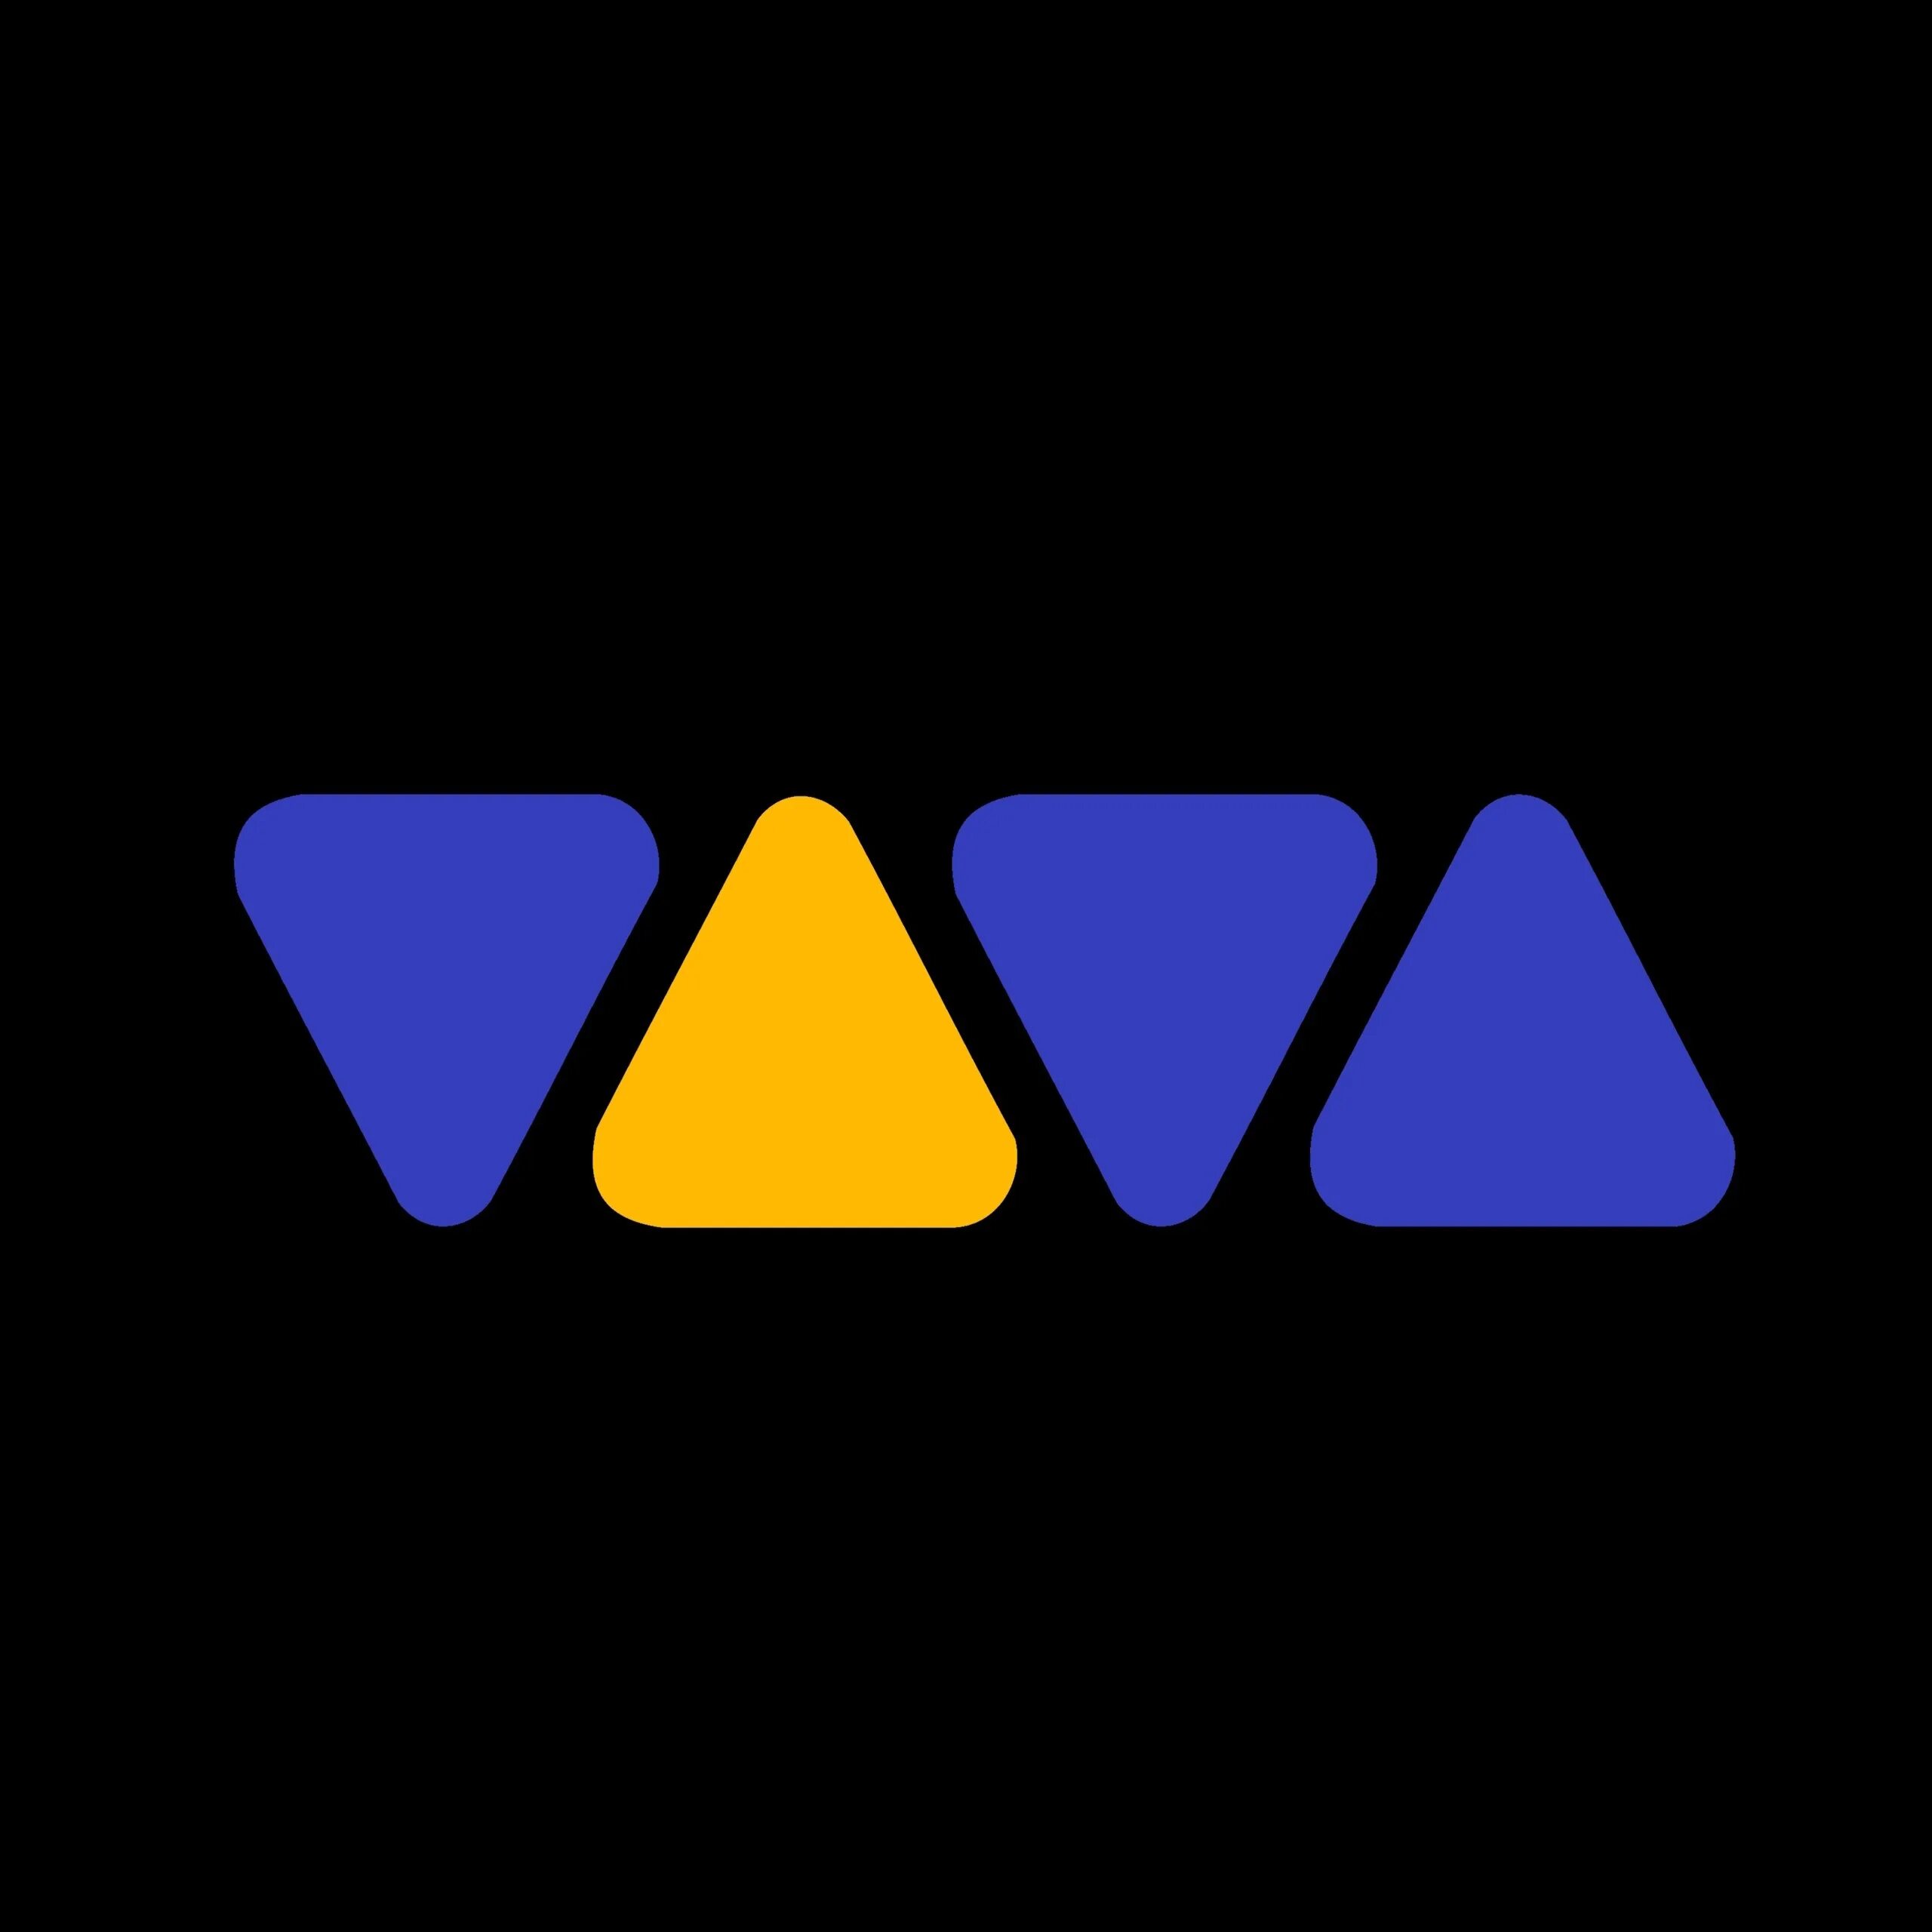 Viva TV 1993. Viva TV 1995. Музыкальные каналы 90х. Viva музыкальный канал.